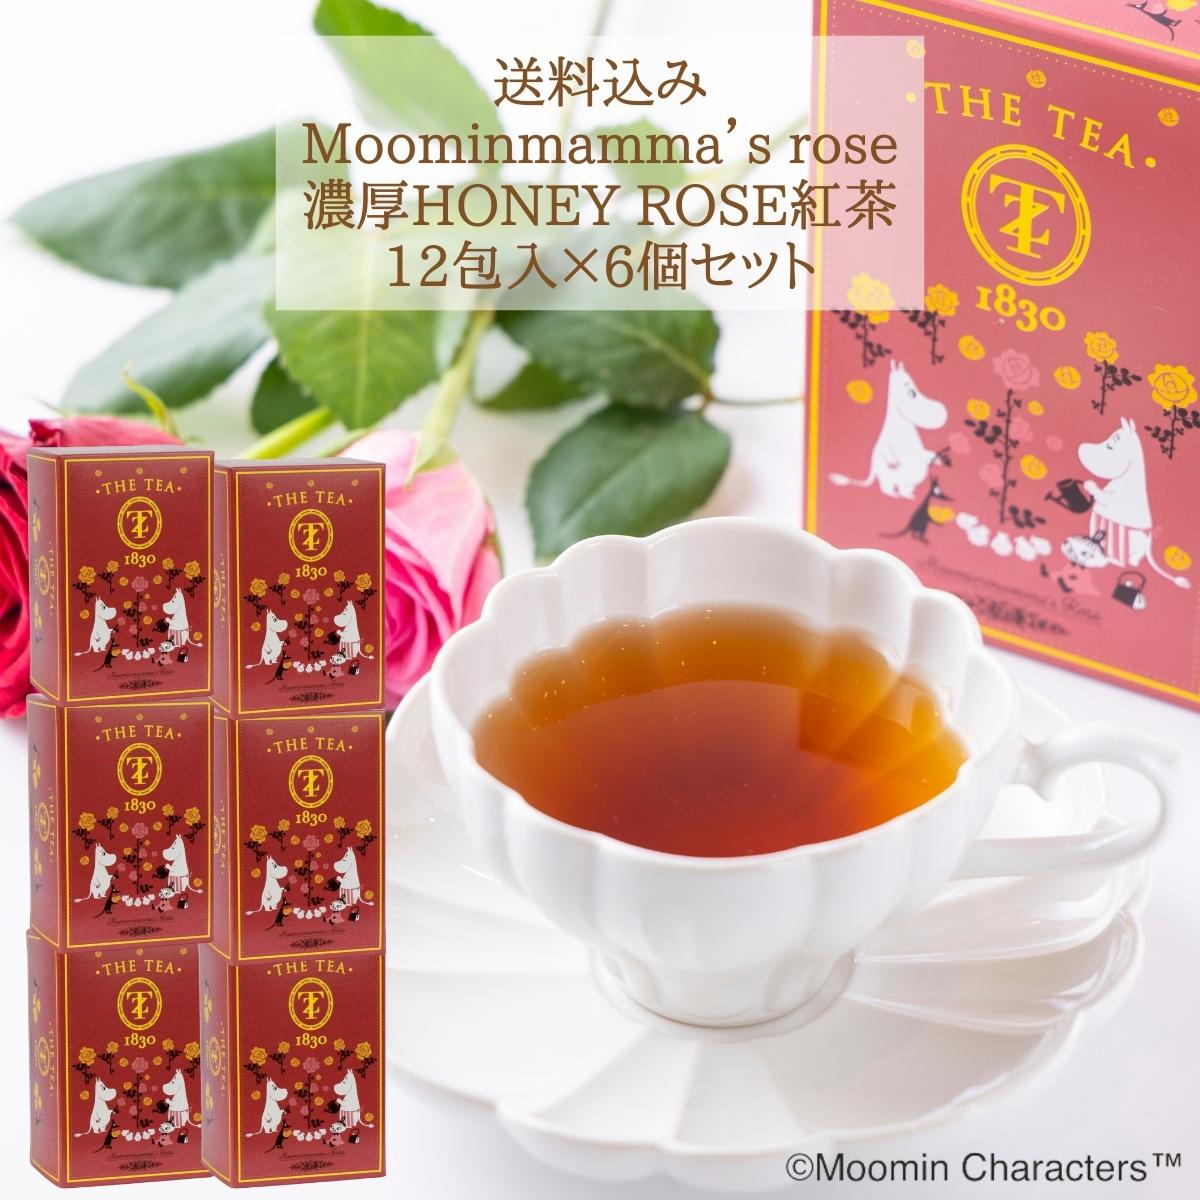 Moominmamma’s Rose濃厚HONEY ROSE紅茶 (12包×6箱) TYAZEN(茶善) ティーバッグ ギフト おしゃれ 高級 プレゼント ムーミン